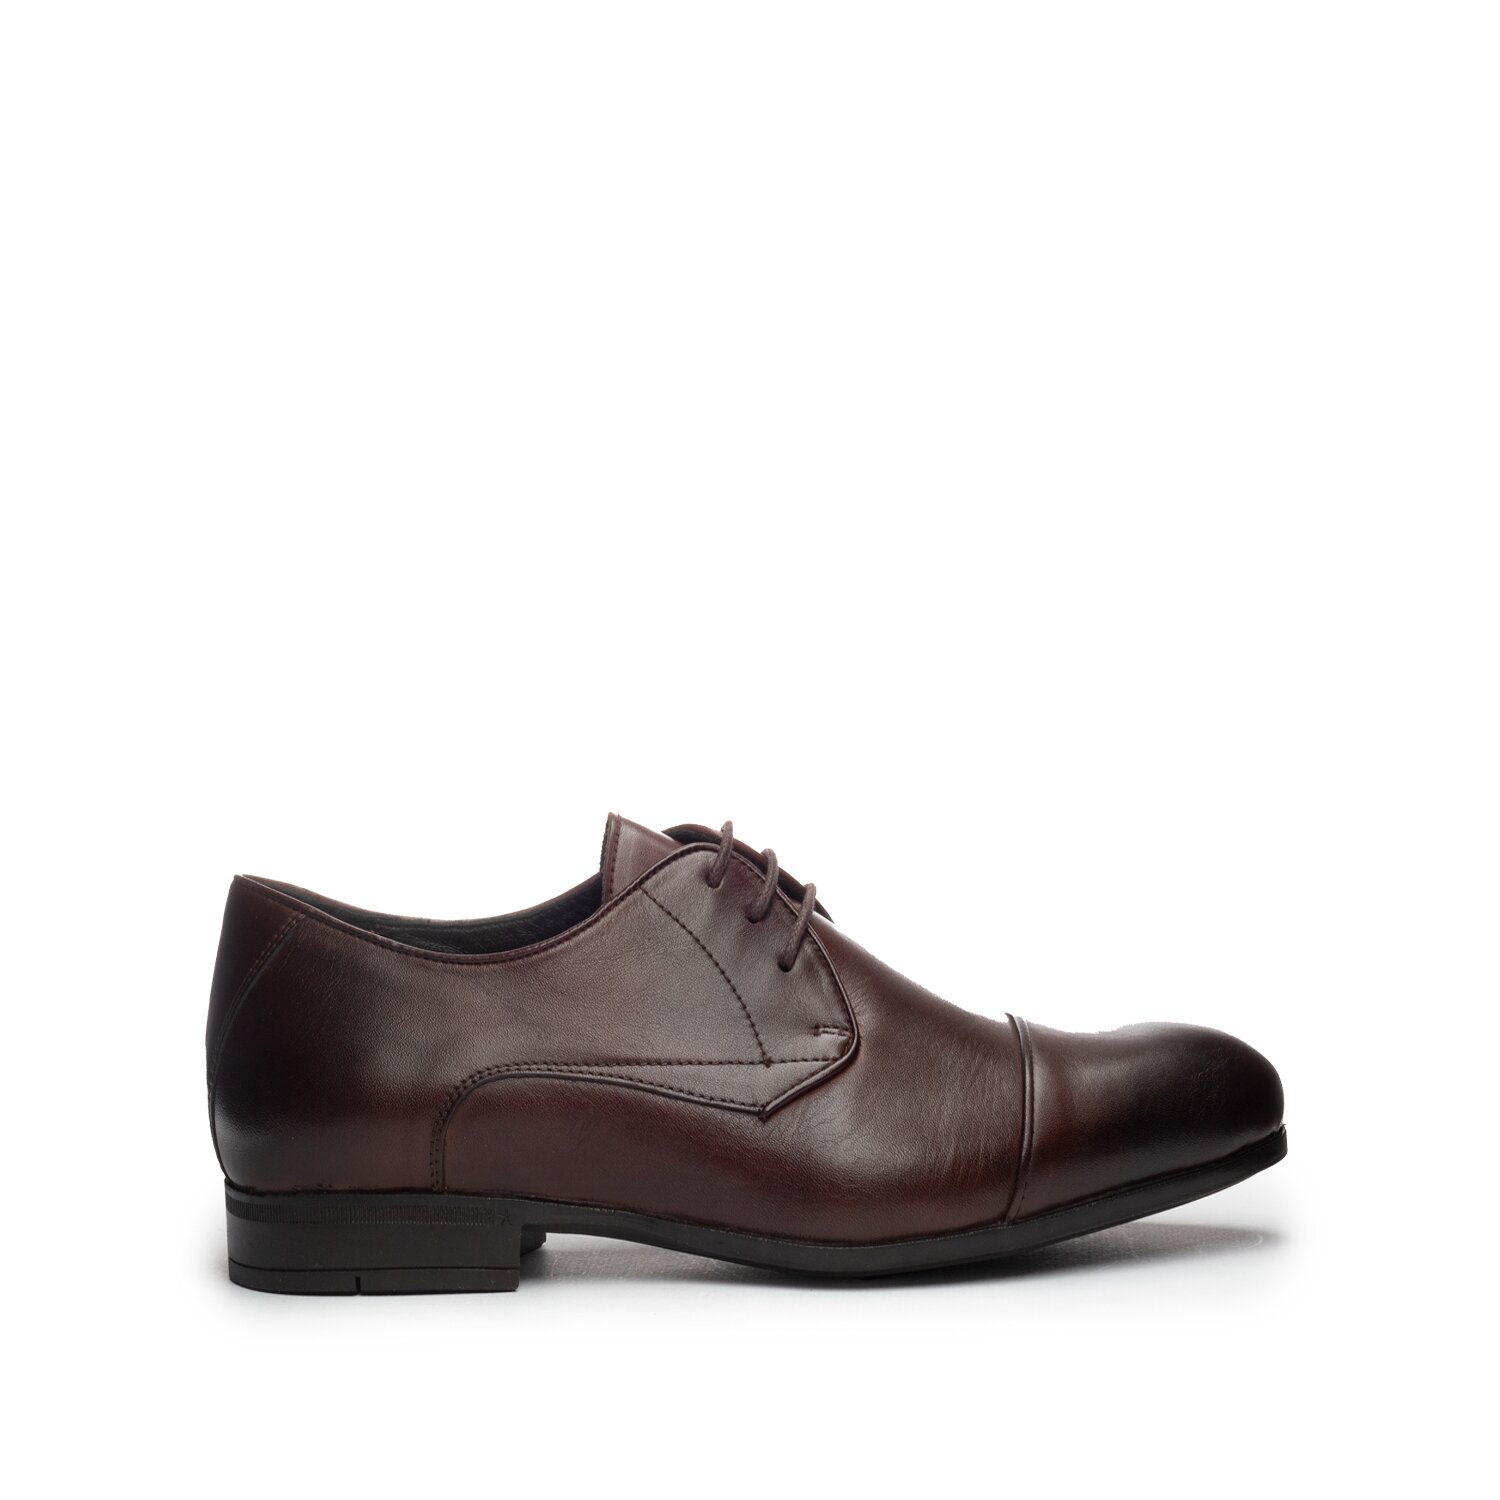 Pantofi barbati eleganti din piele naturala, Leofex- Mostra 890-1 Red Wood